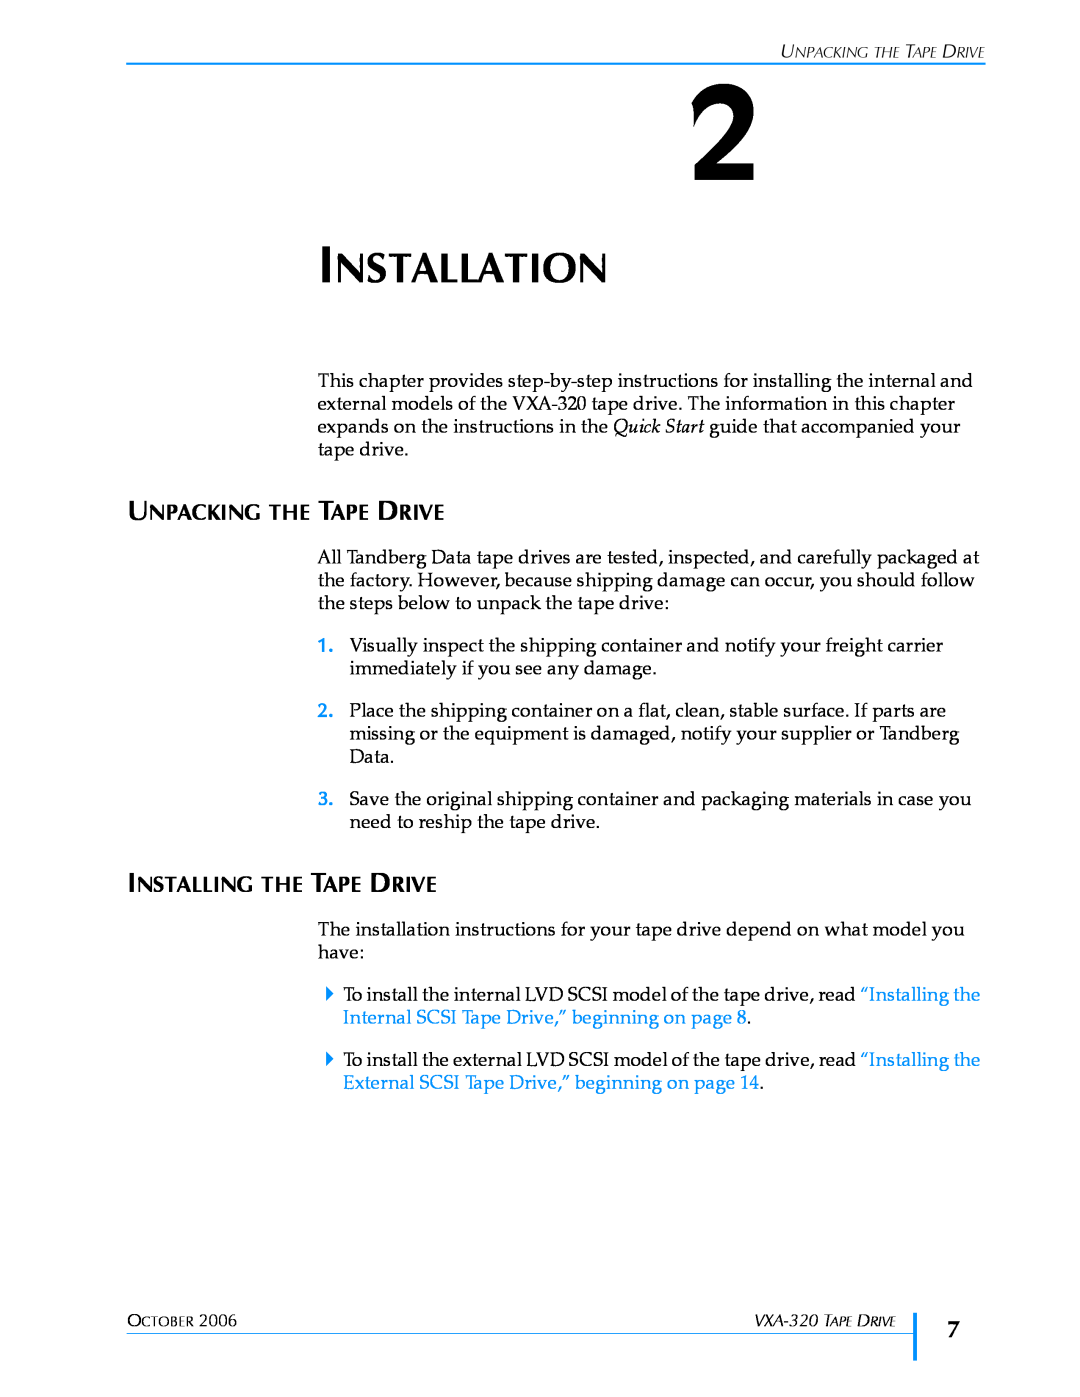 Tandberg Data VXA-320 (VXA-3) manual Installation, Unpacking The Tape Drive, Installing The Tape Drive 